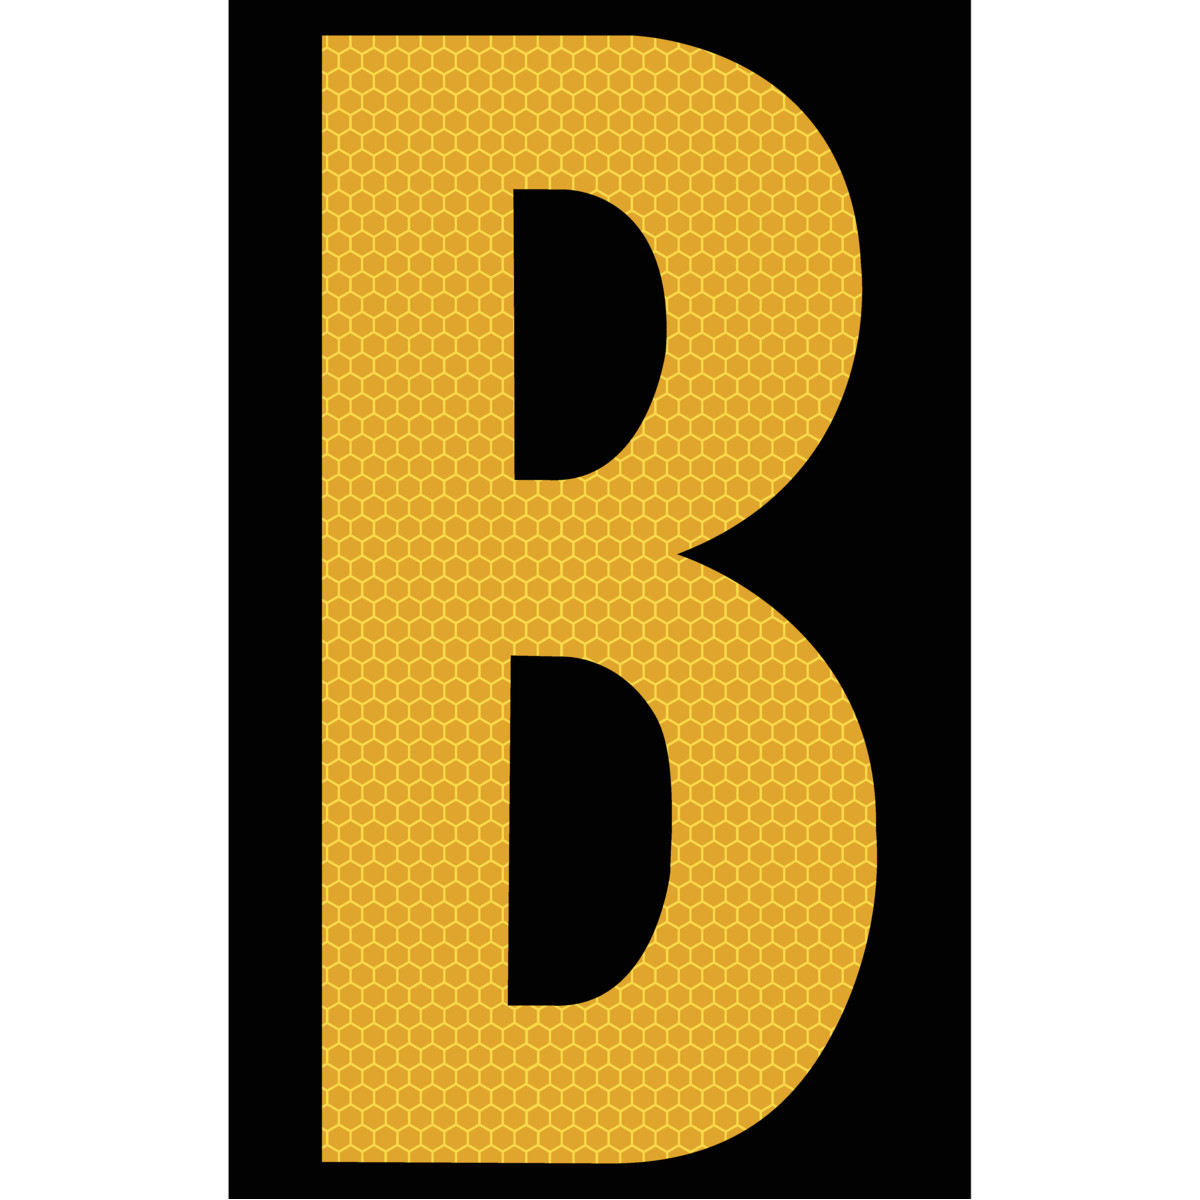 3" Yellow on Black SunBright® Reflective "B"